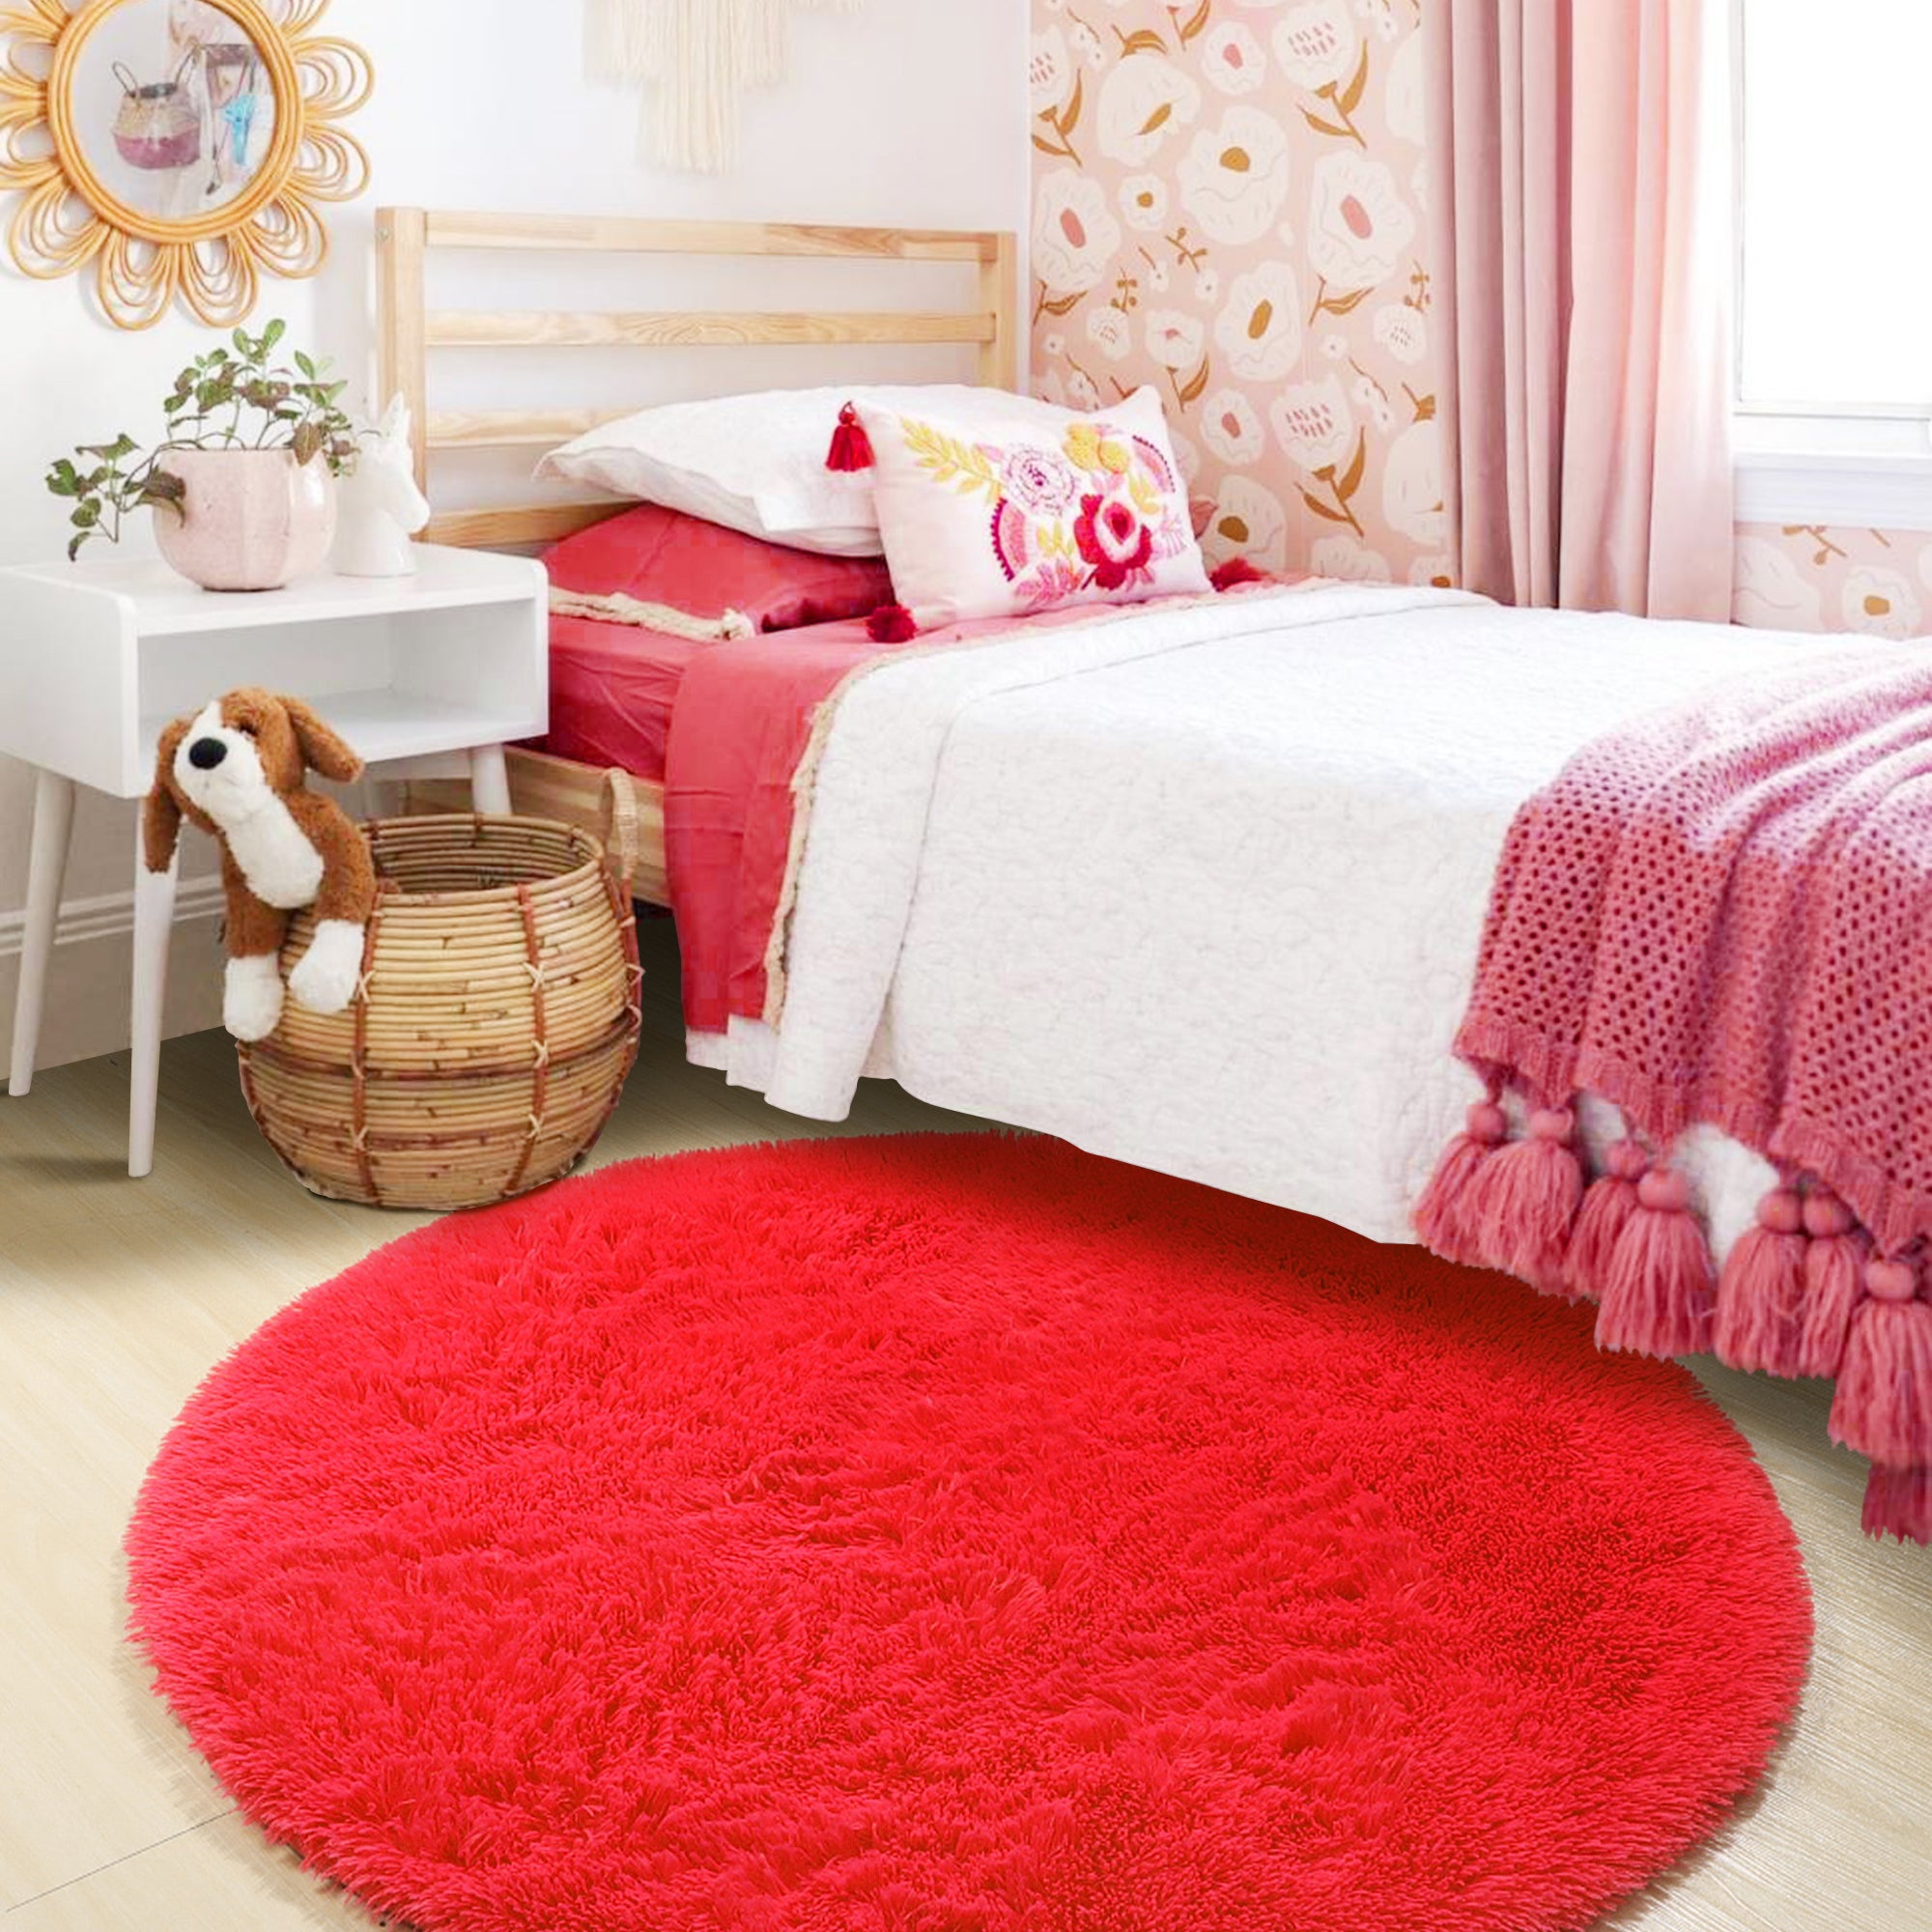 Super Soft Room Decor Red 4ft Round Area Rug